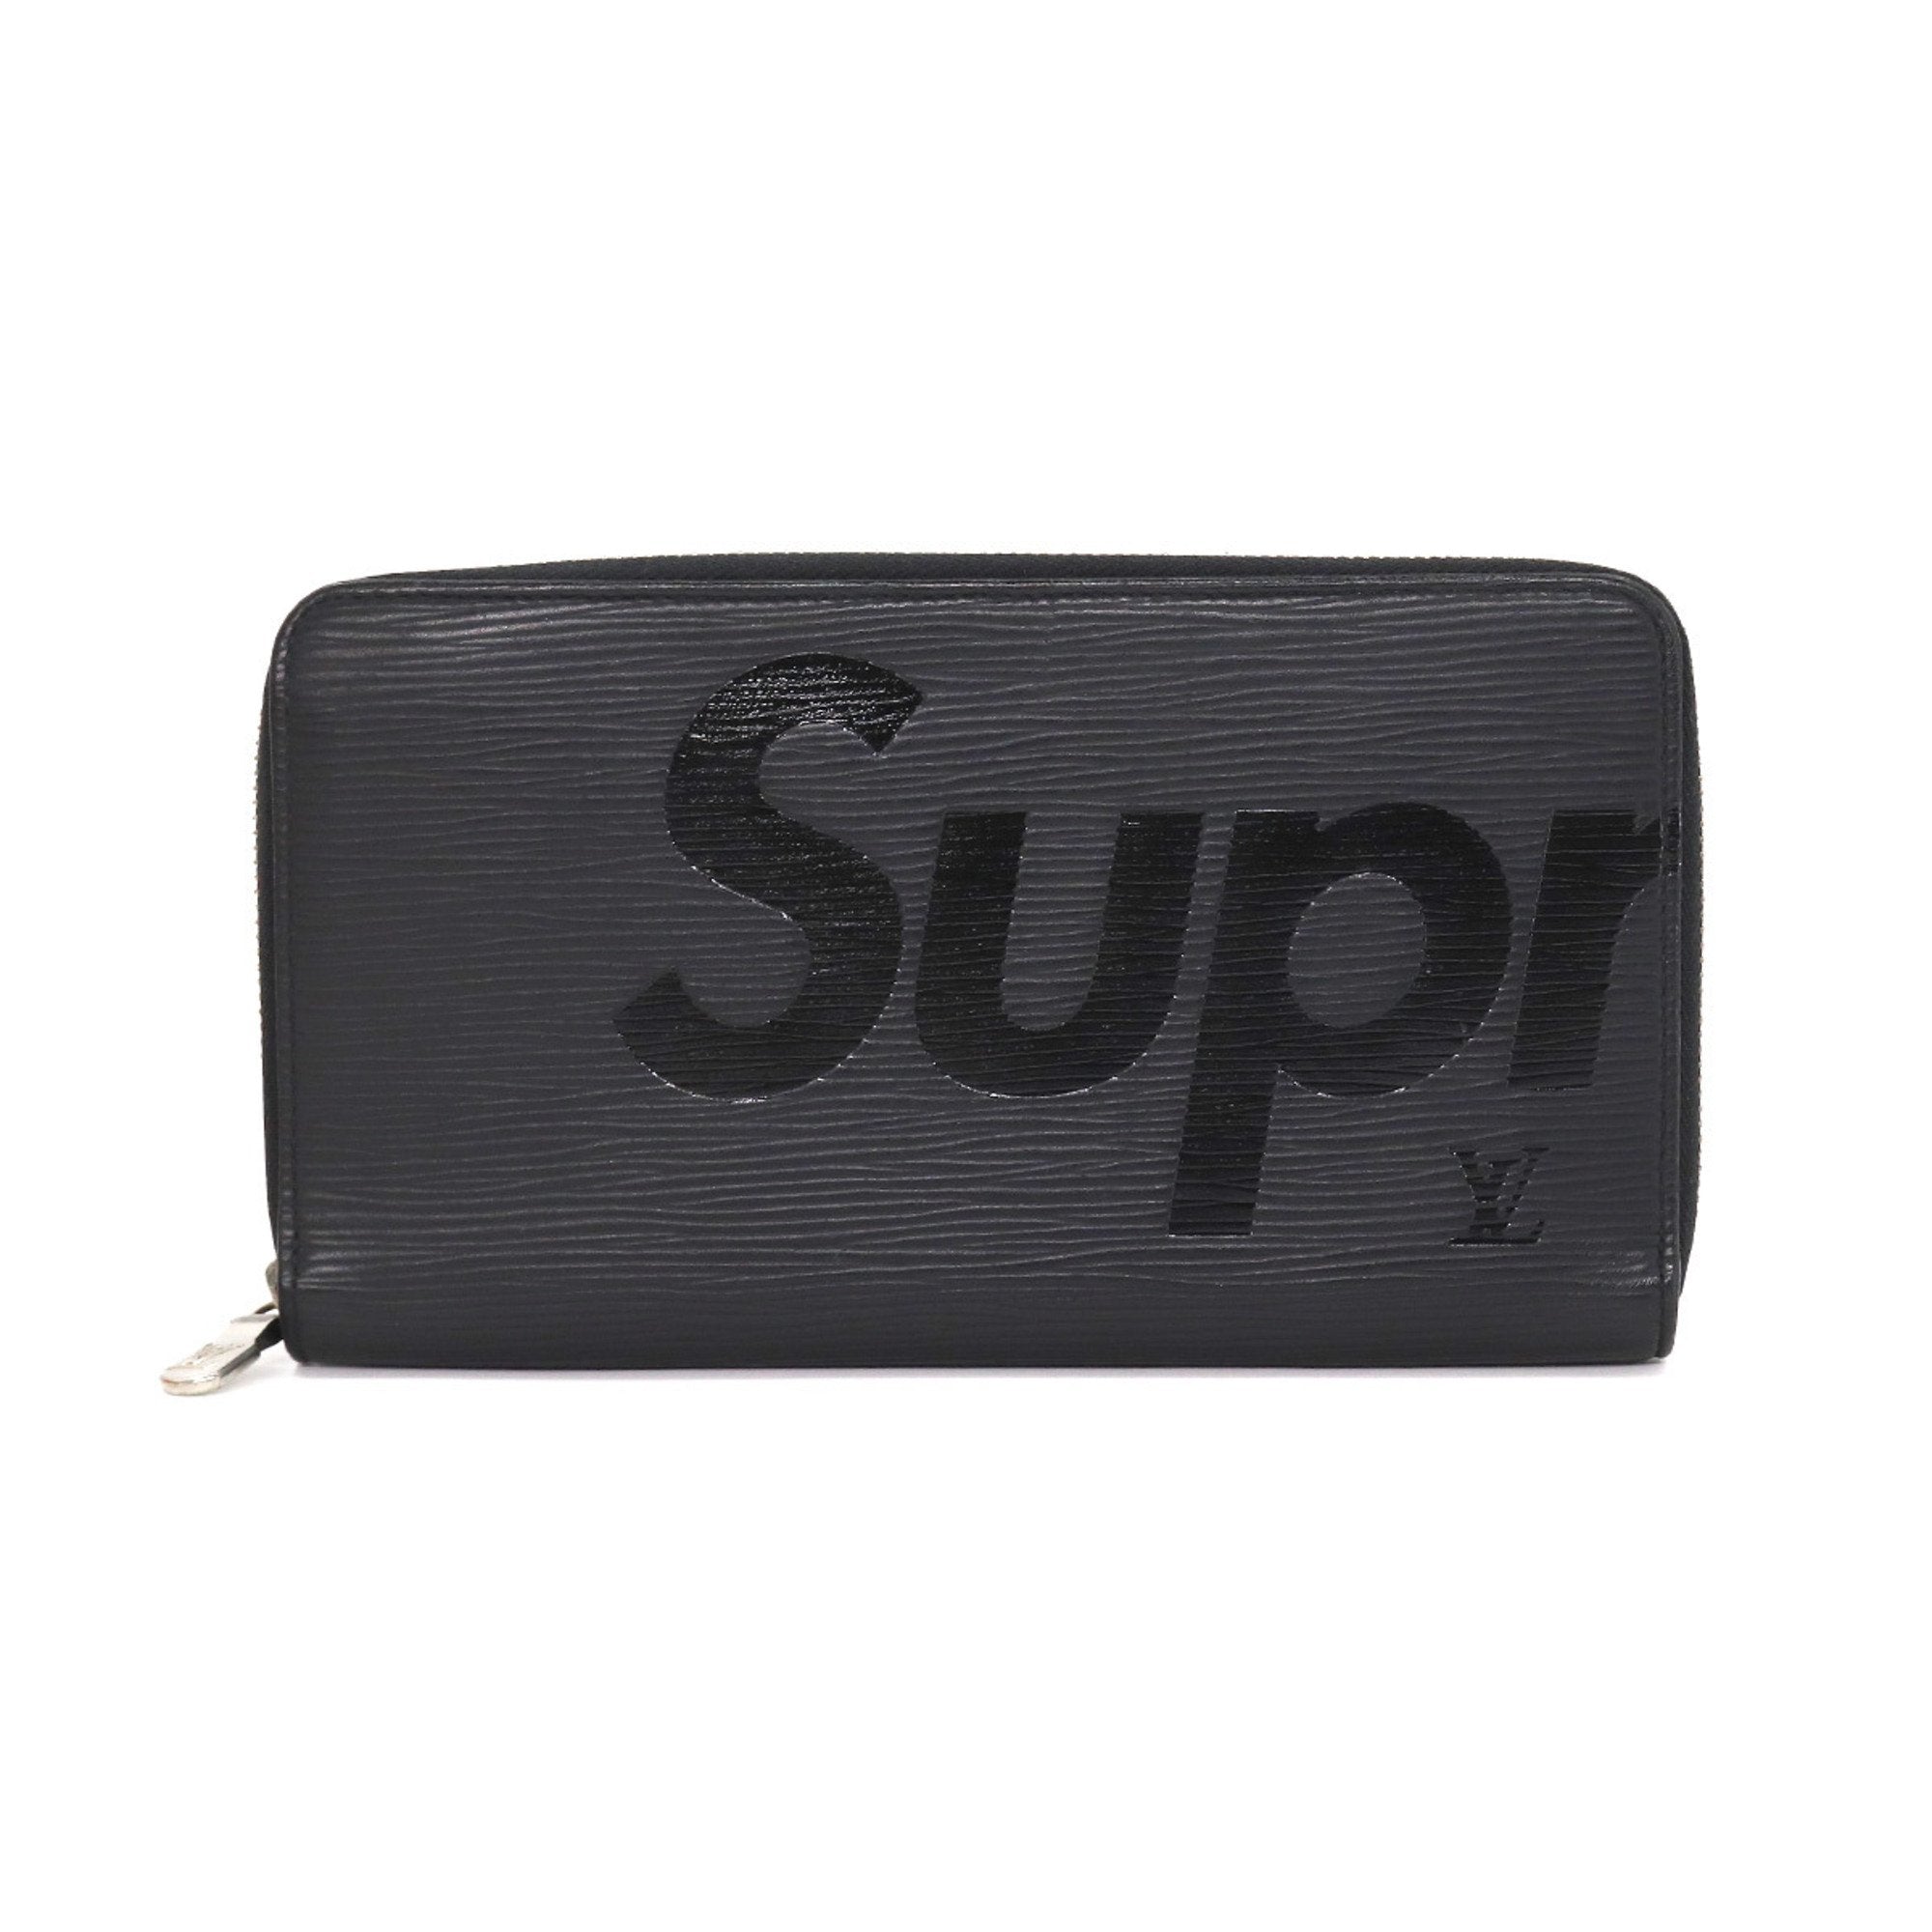 supreme lv wallet black and white